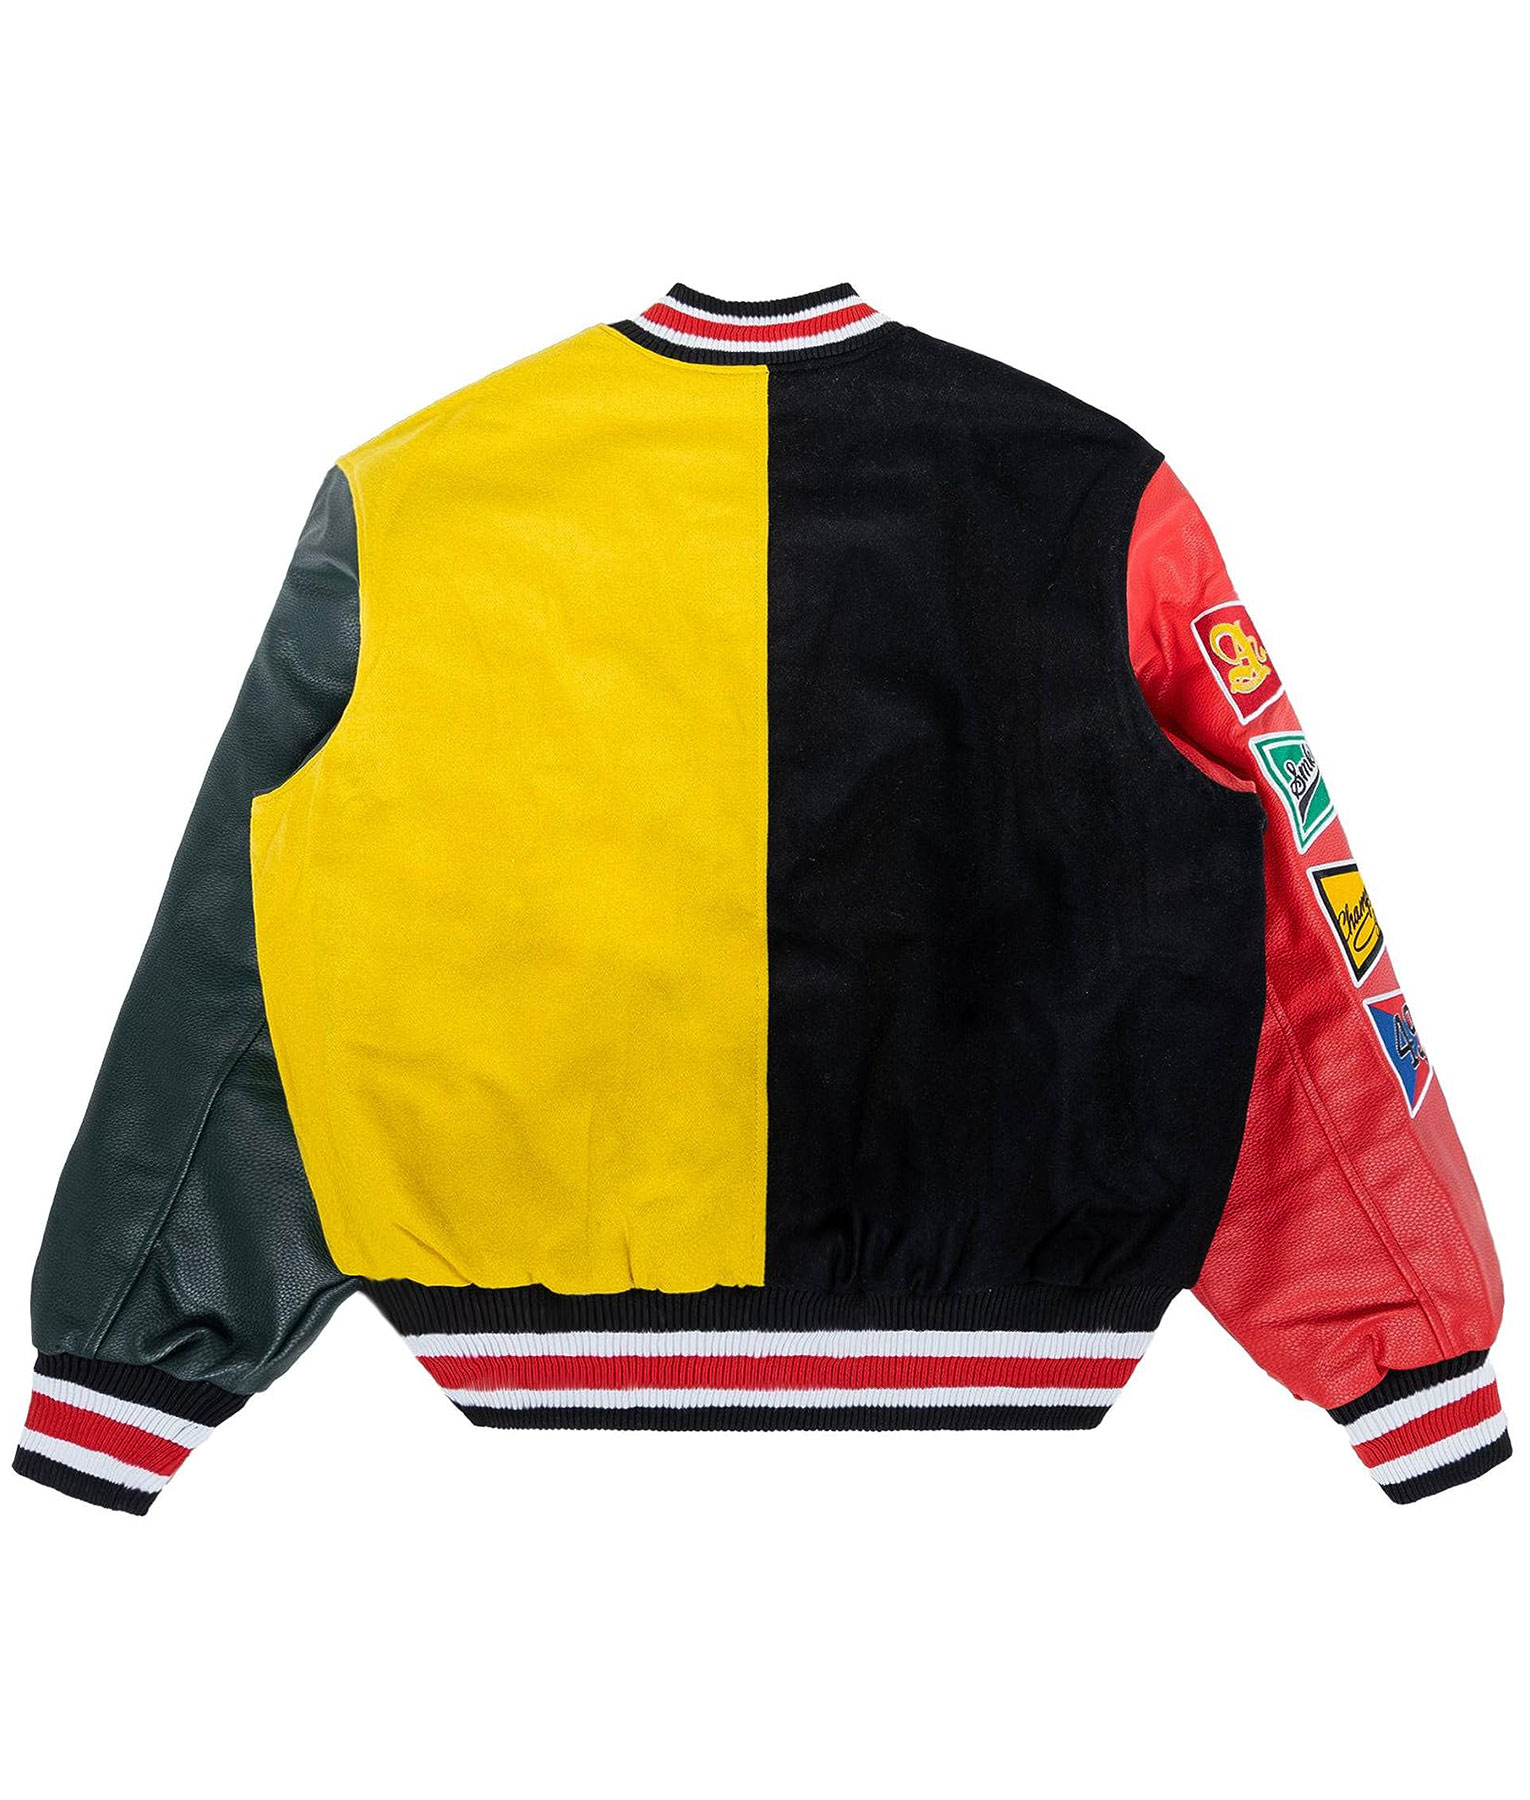 All Star Varsity Jacket (2)